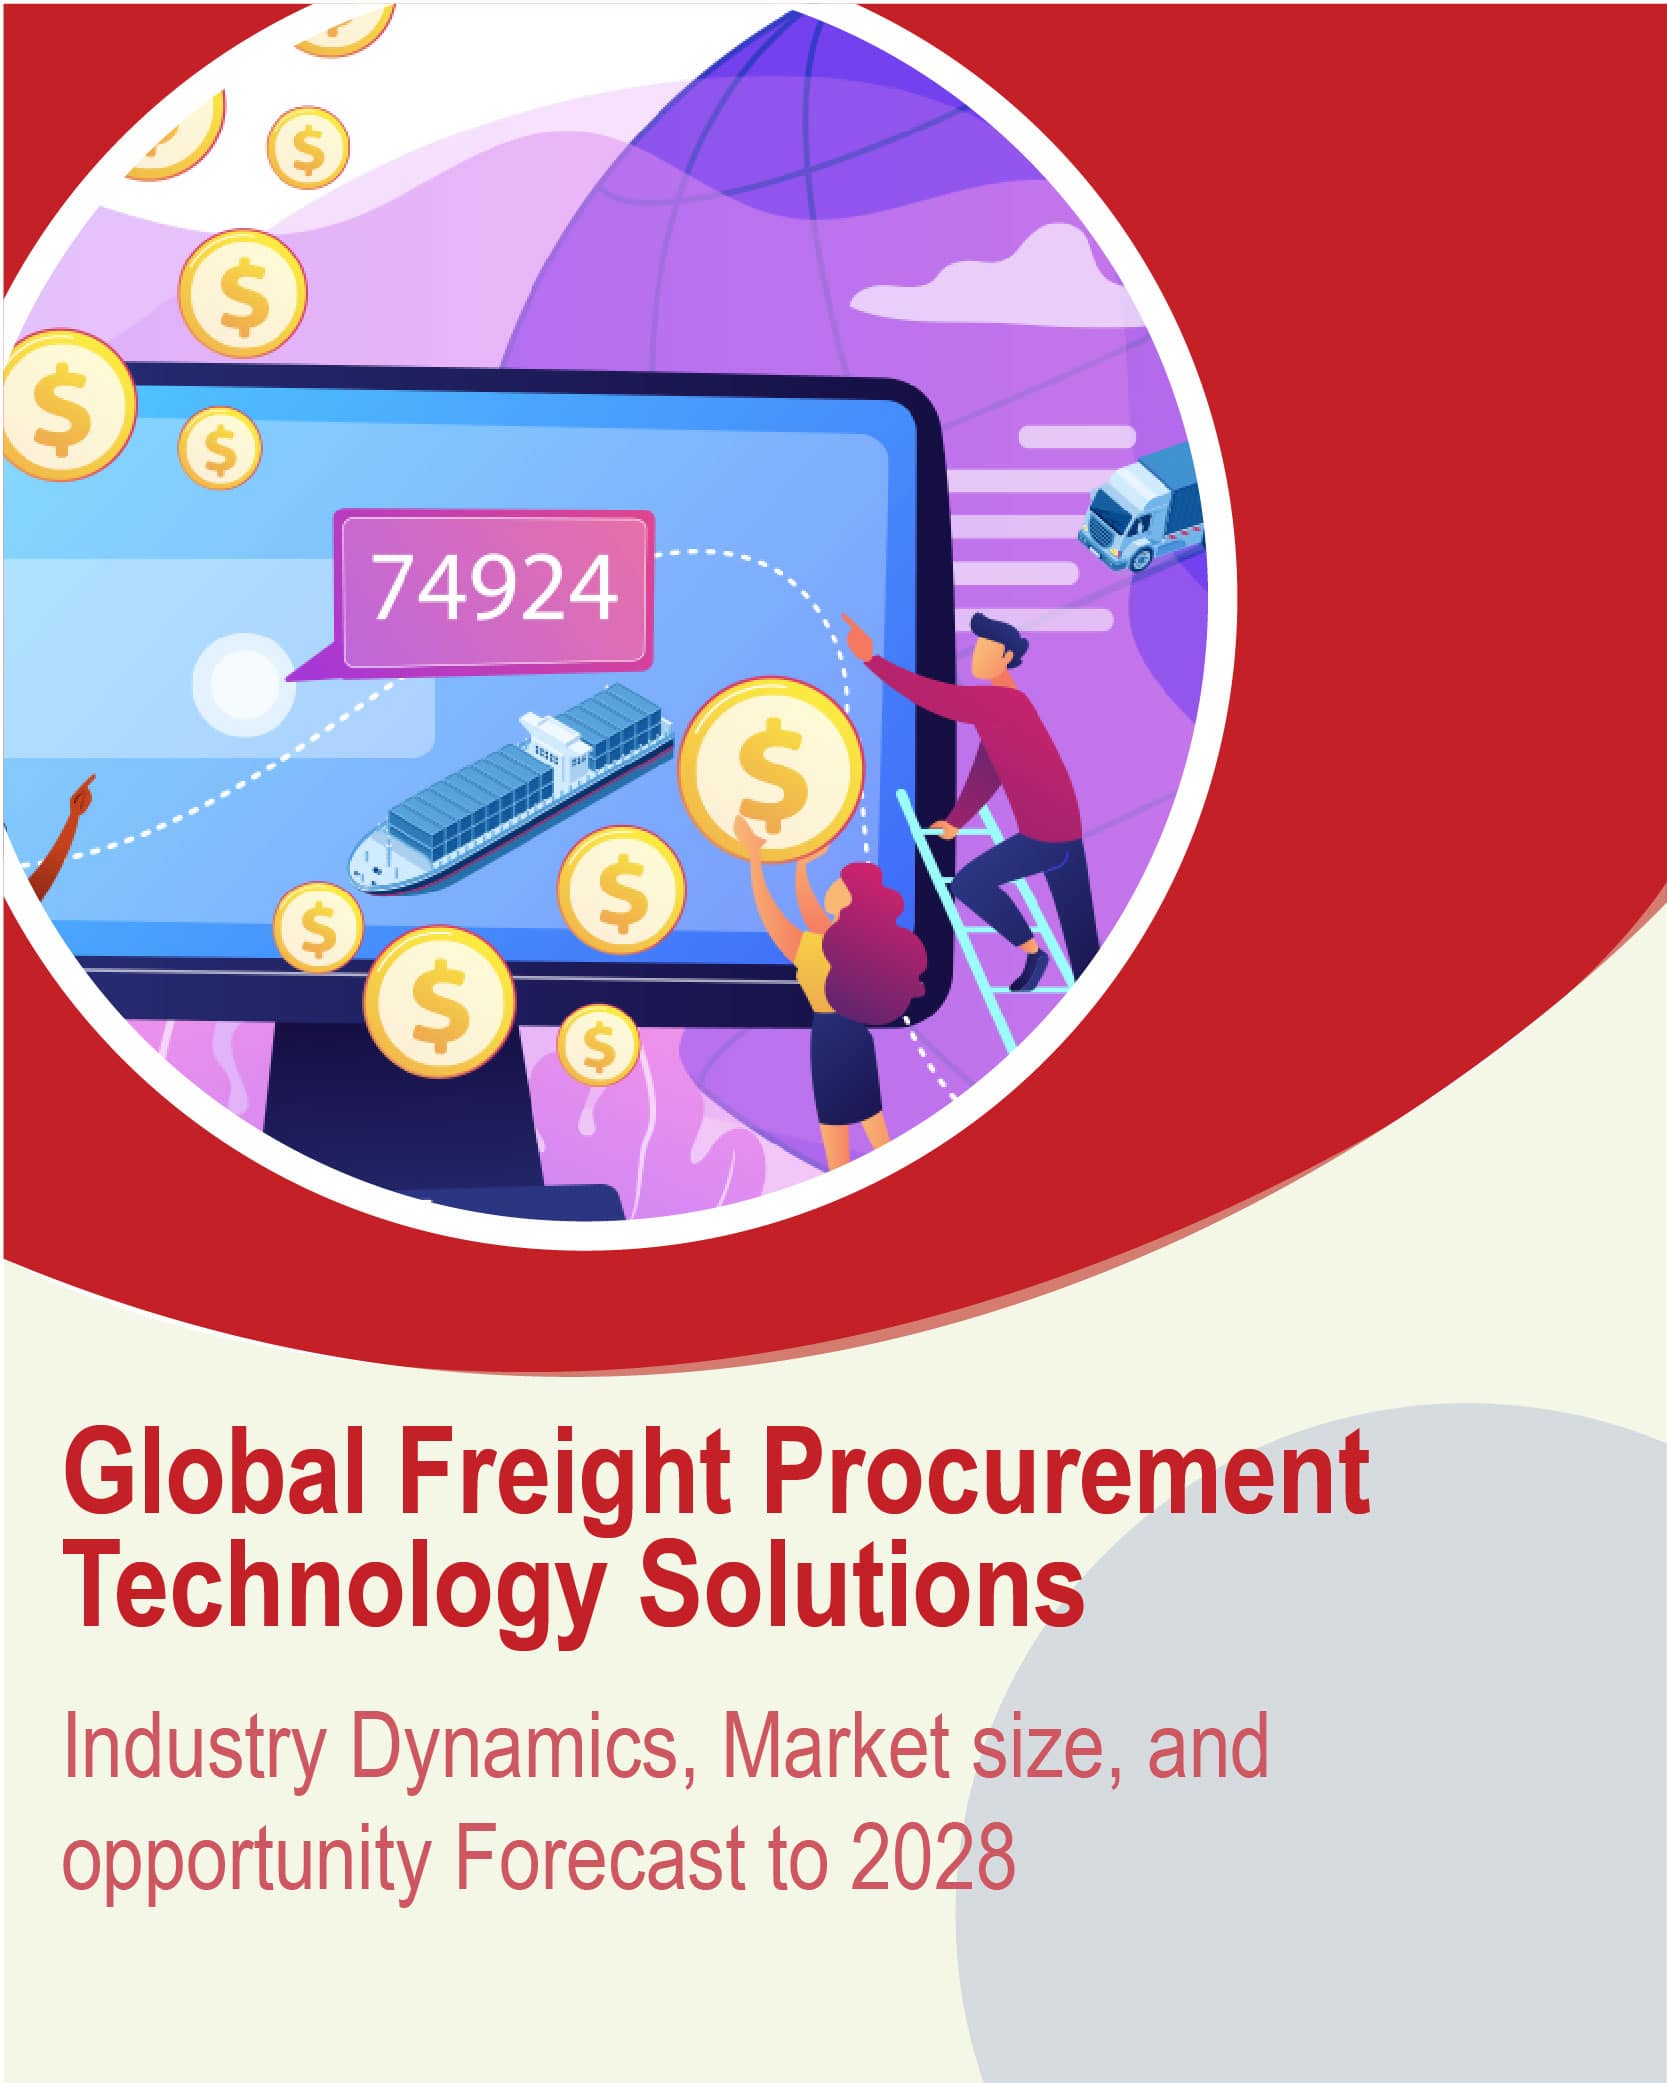 Freight Procurement Technology Solutions Market